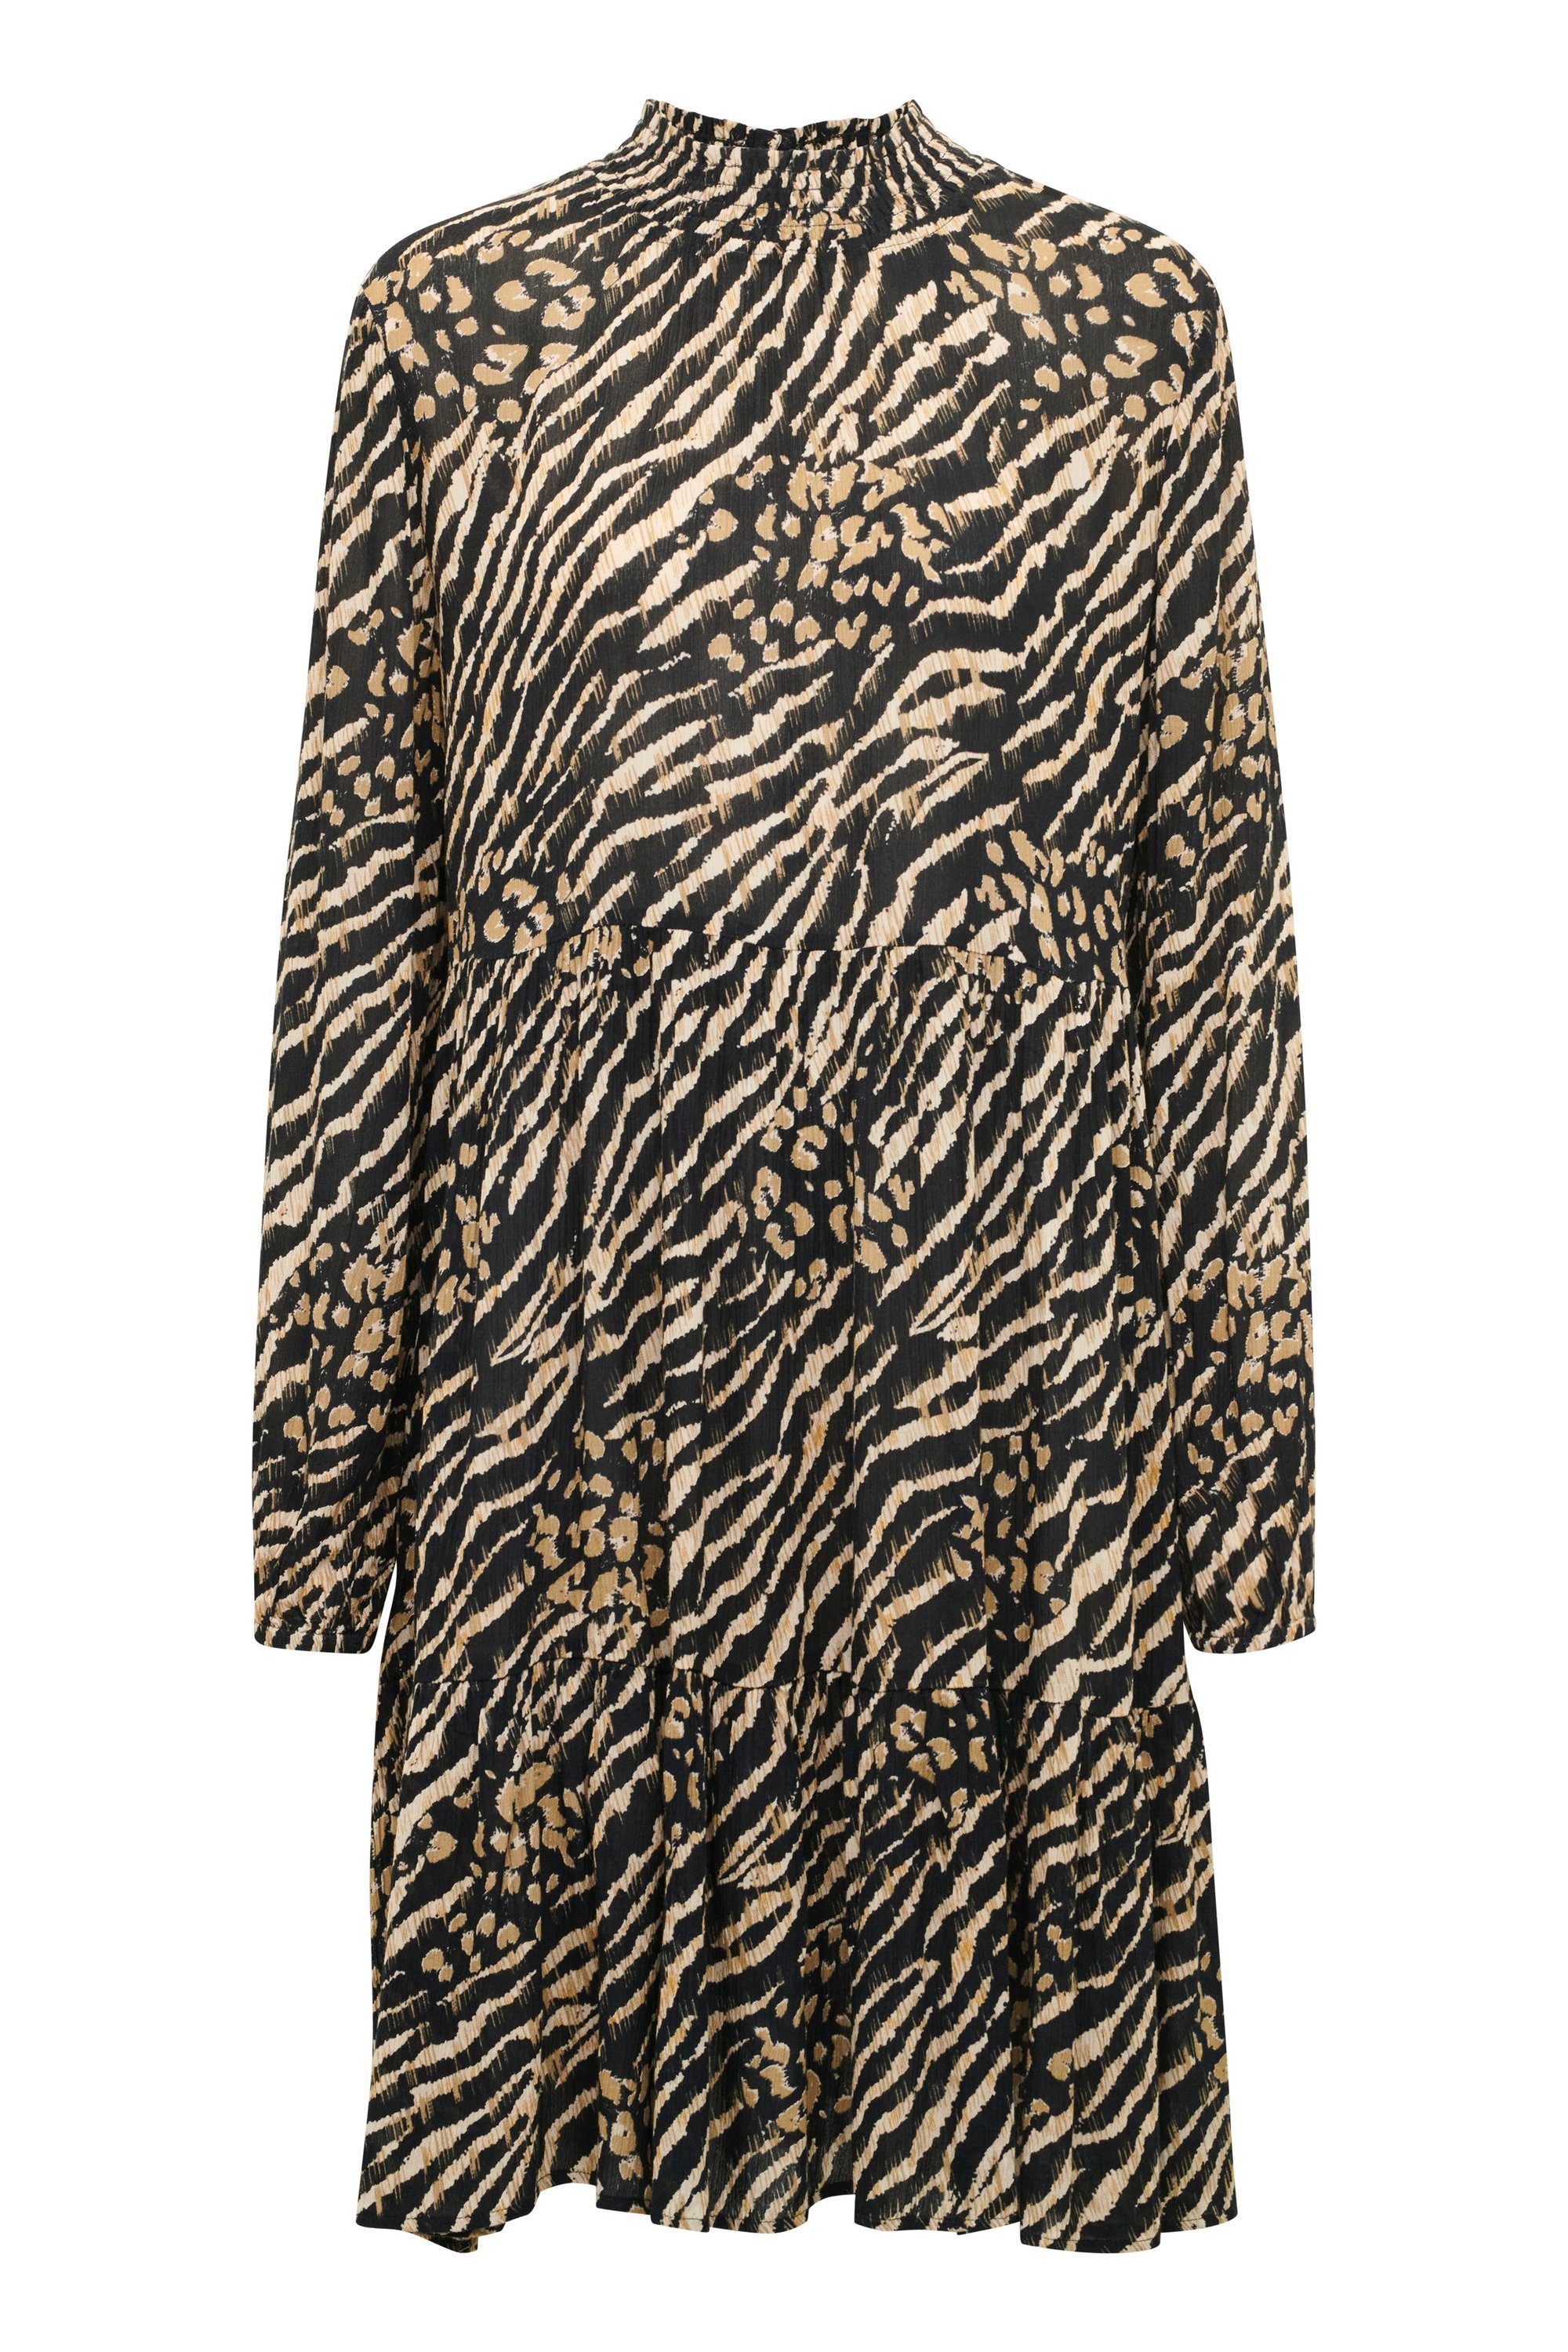 KAFFE Jerseykleid Kleid KAamber Black And Brown Animal Print